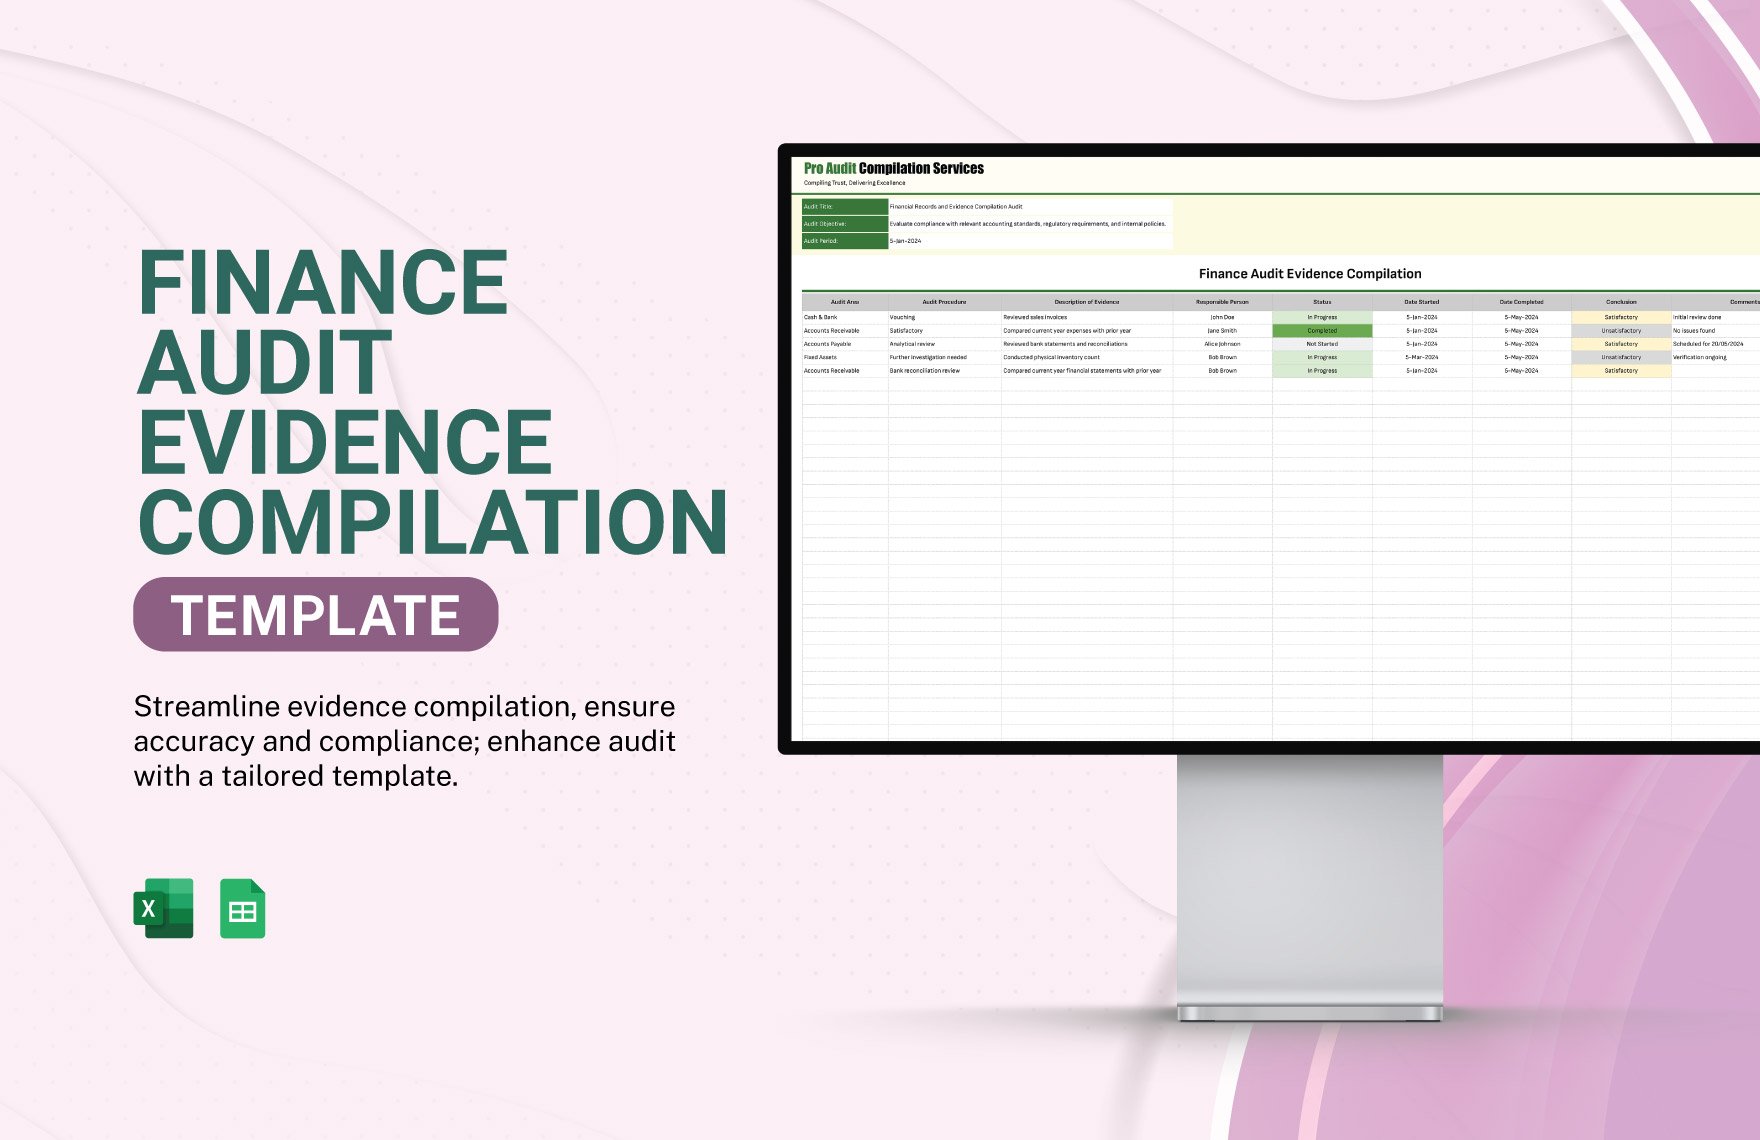 Finance Audit Evidence Compilation Template